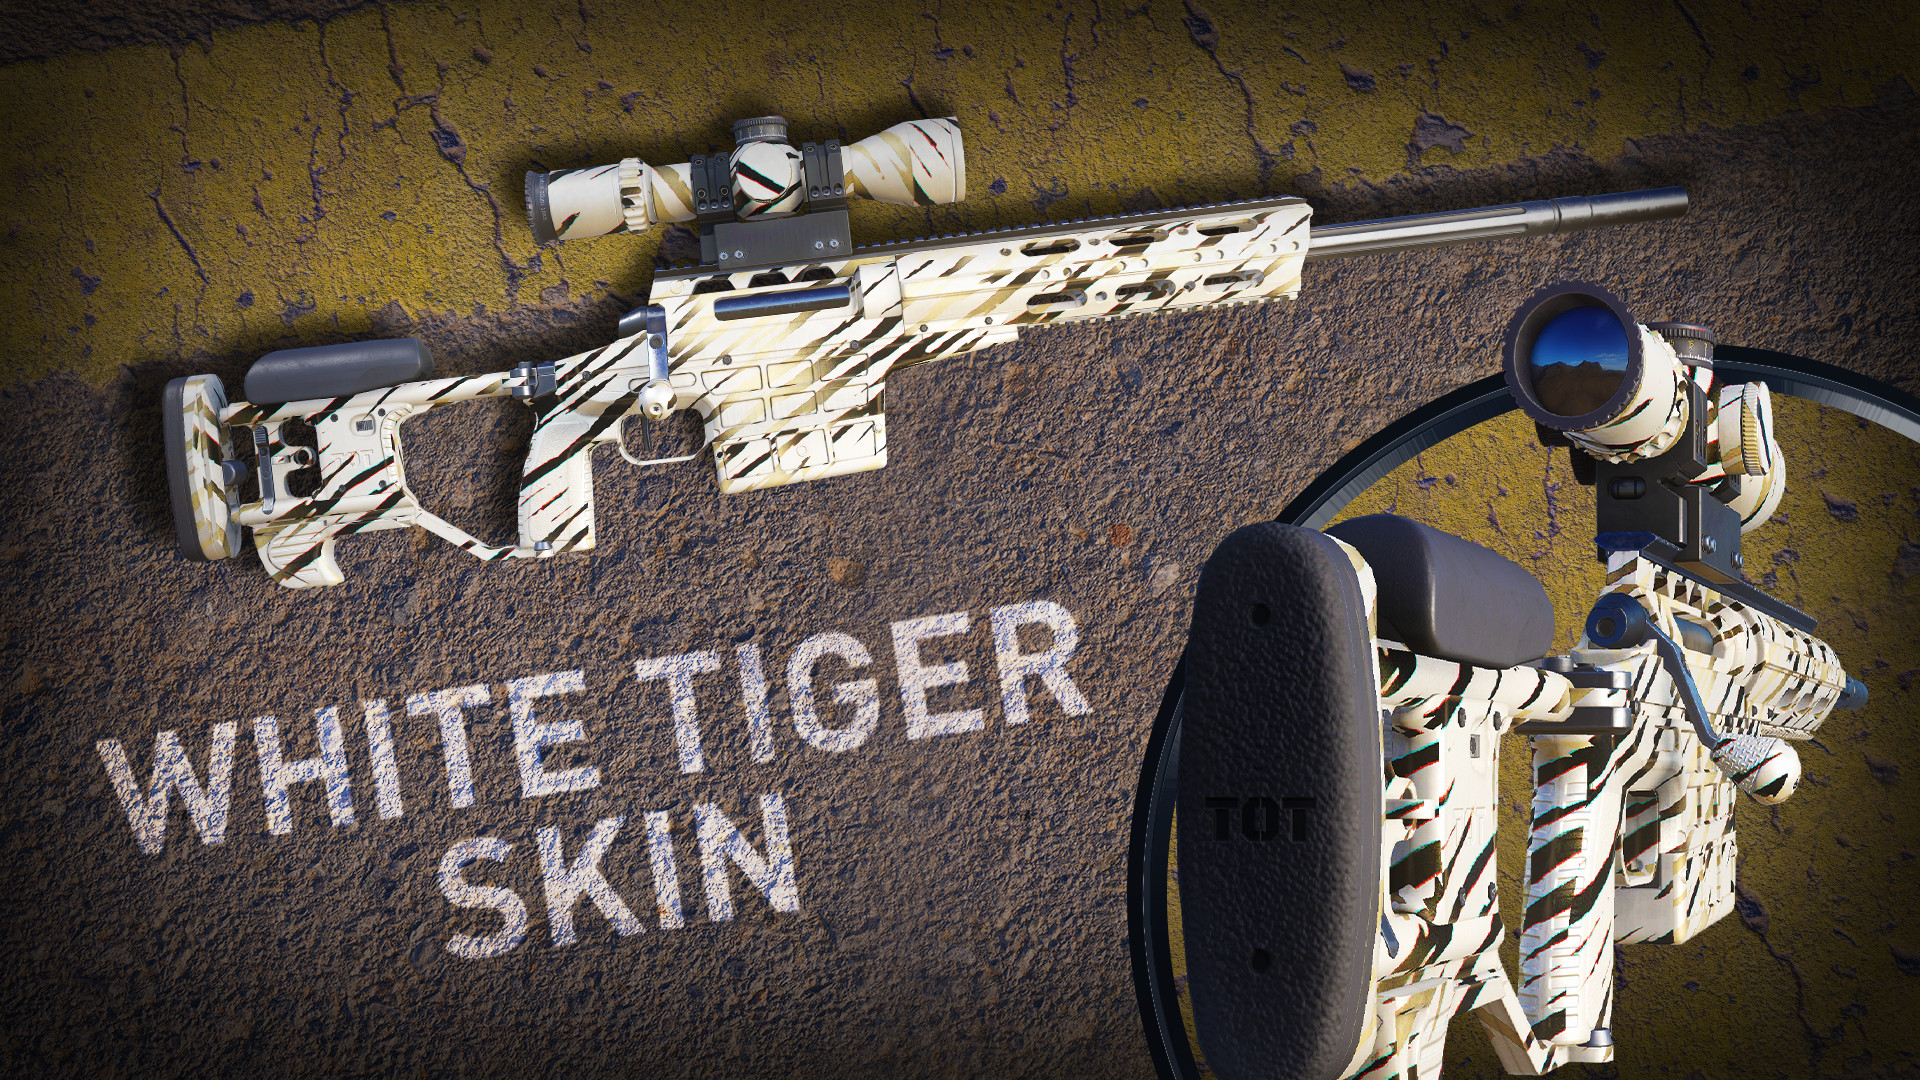 Sniper Ghost Warrior Contracts 2 - Skull & Bones Skin Pack on Steam